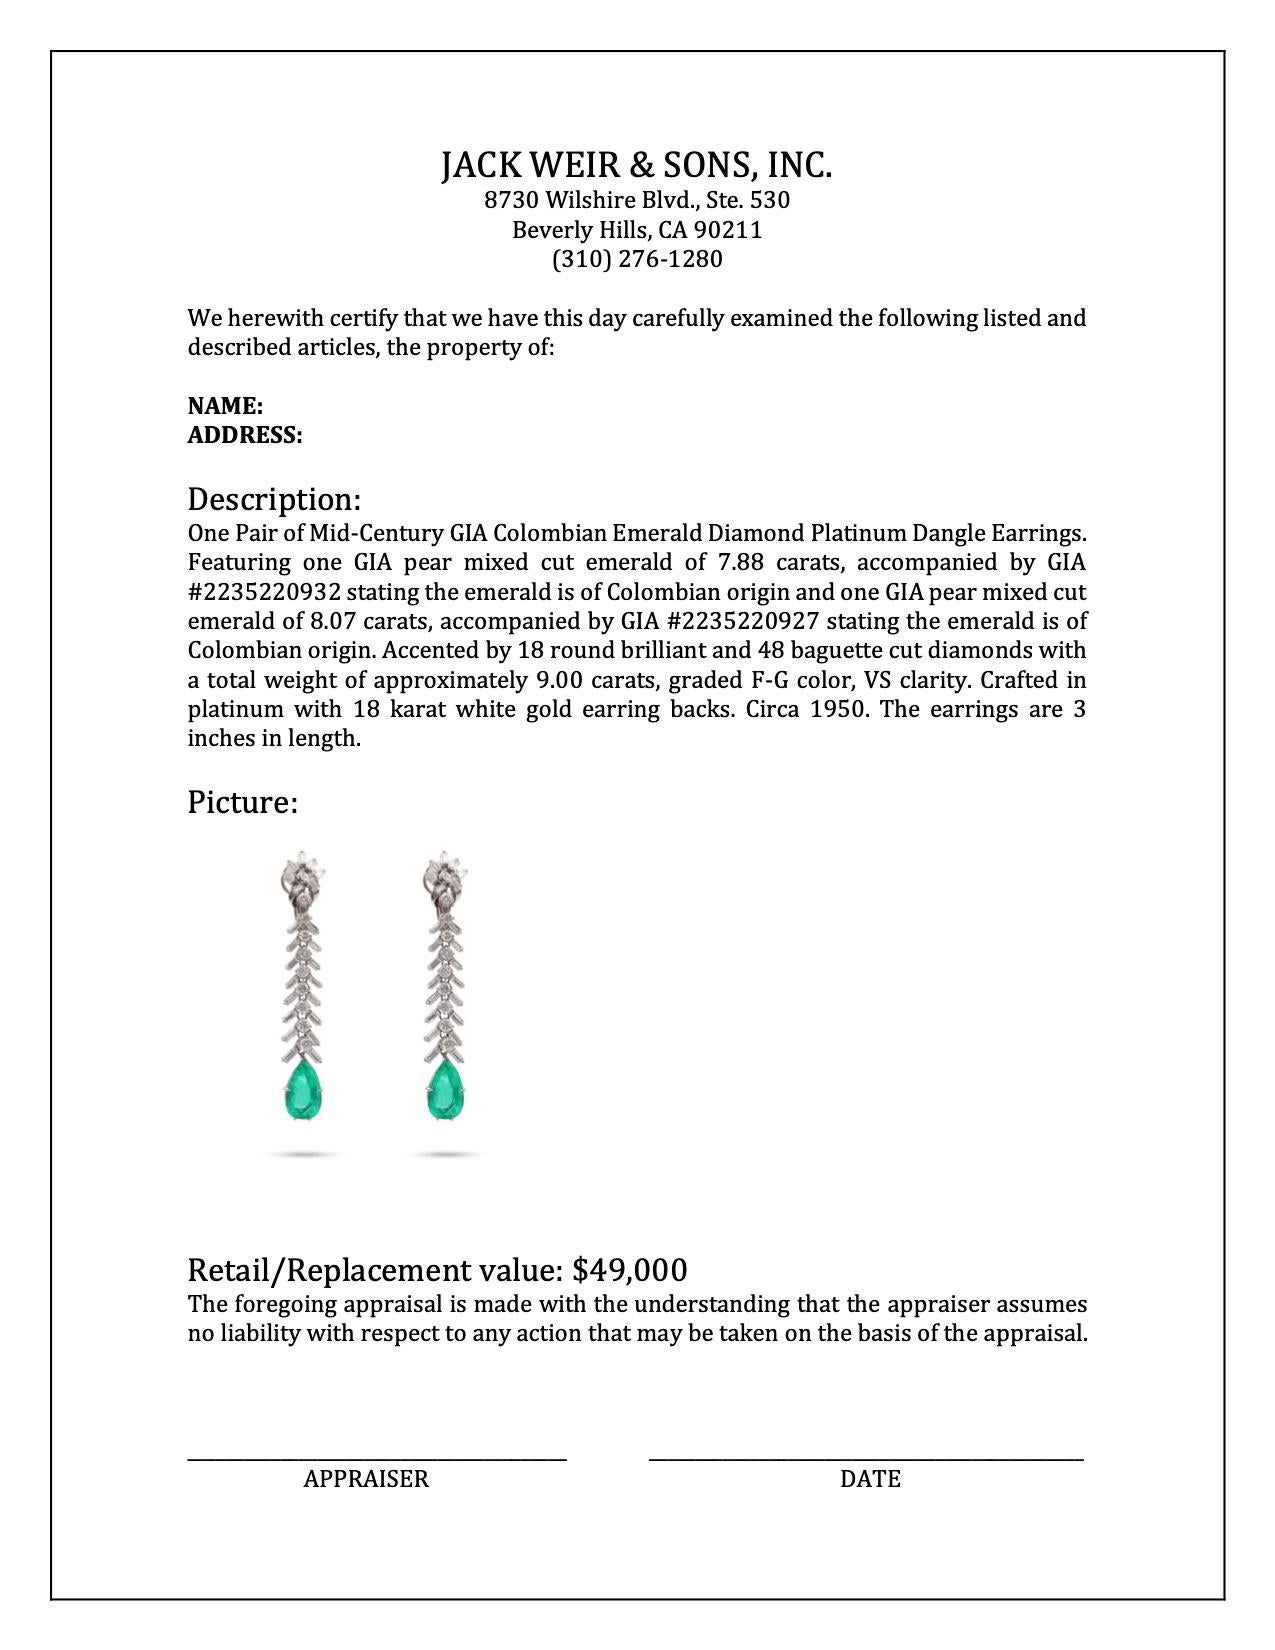 Mid-Century GIA Colombian Emerald Diamond Platinum Dangle Earrings For Sale 1